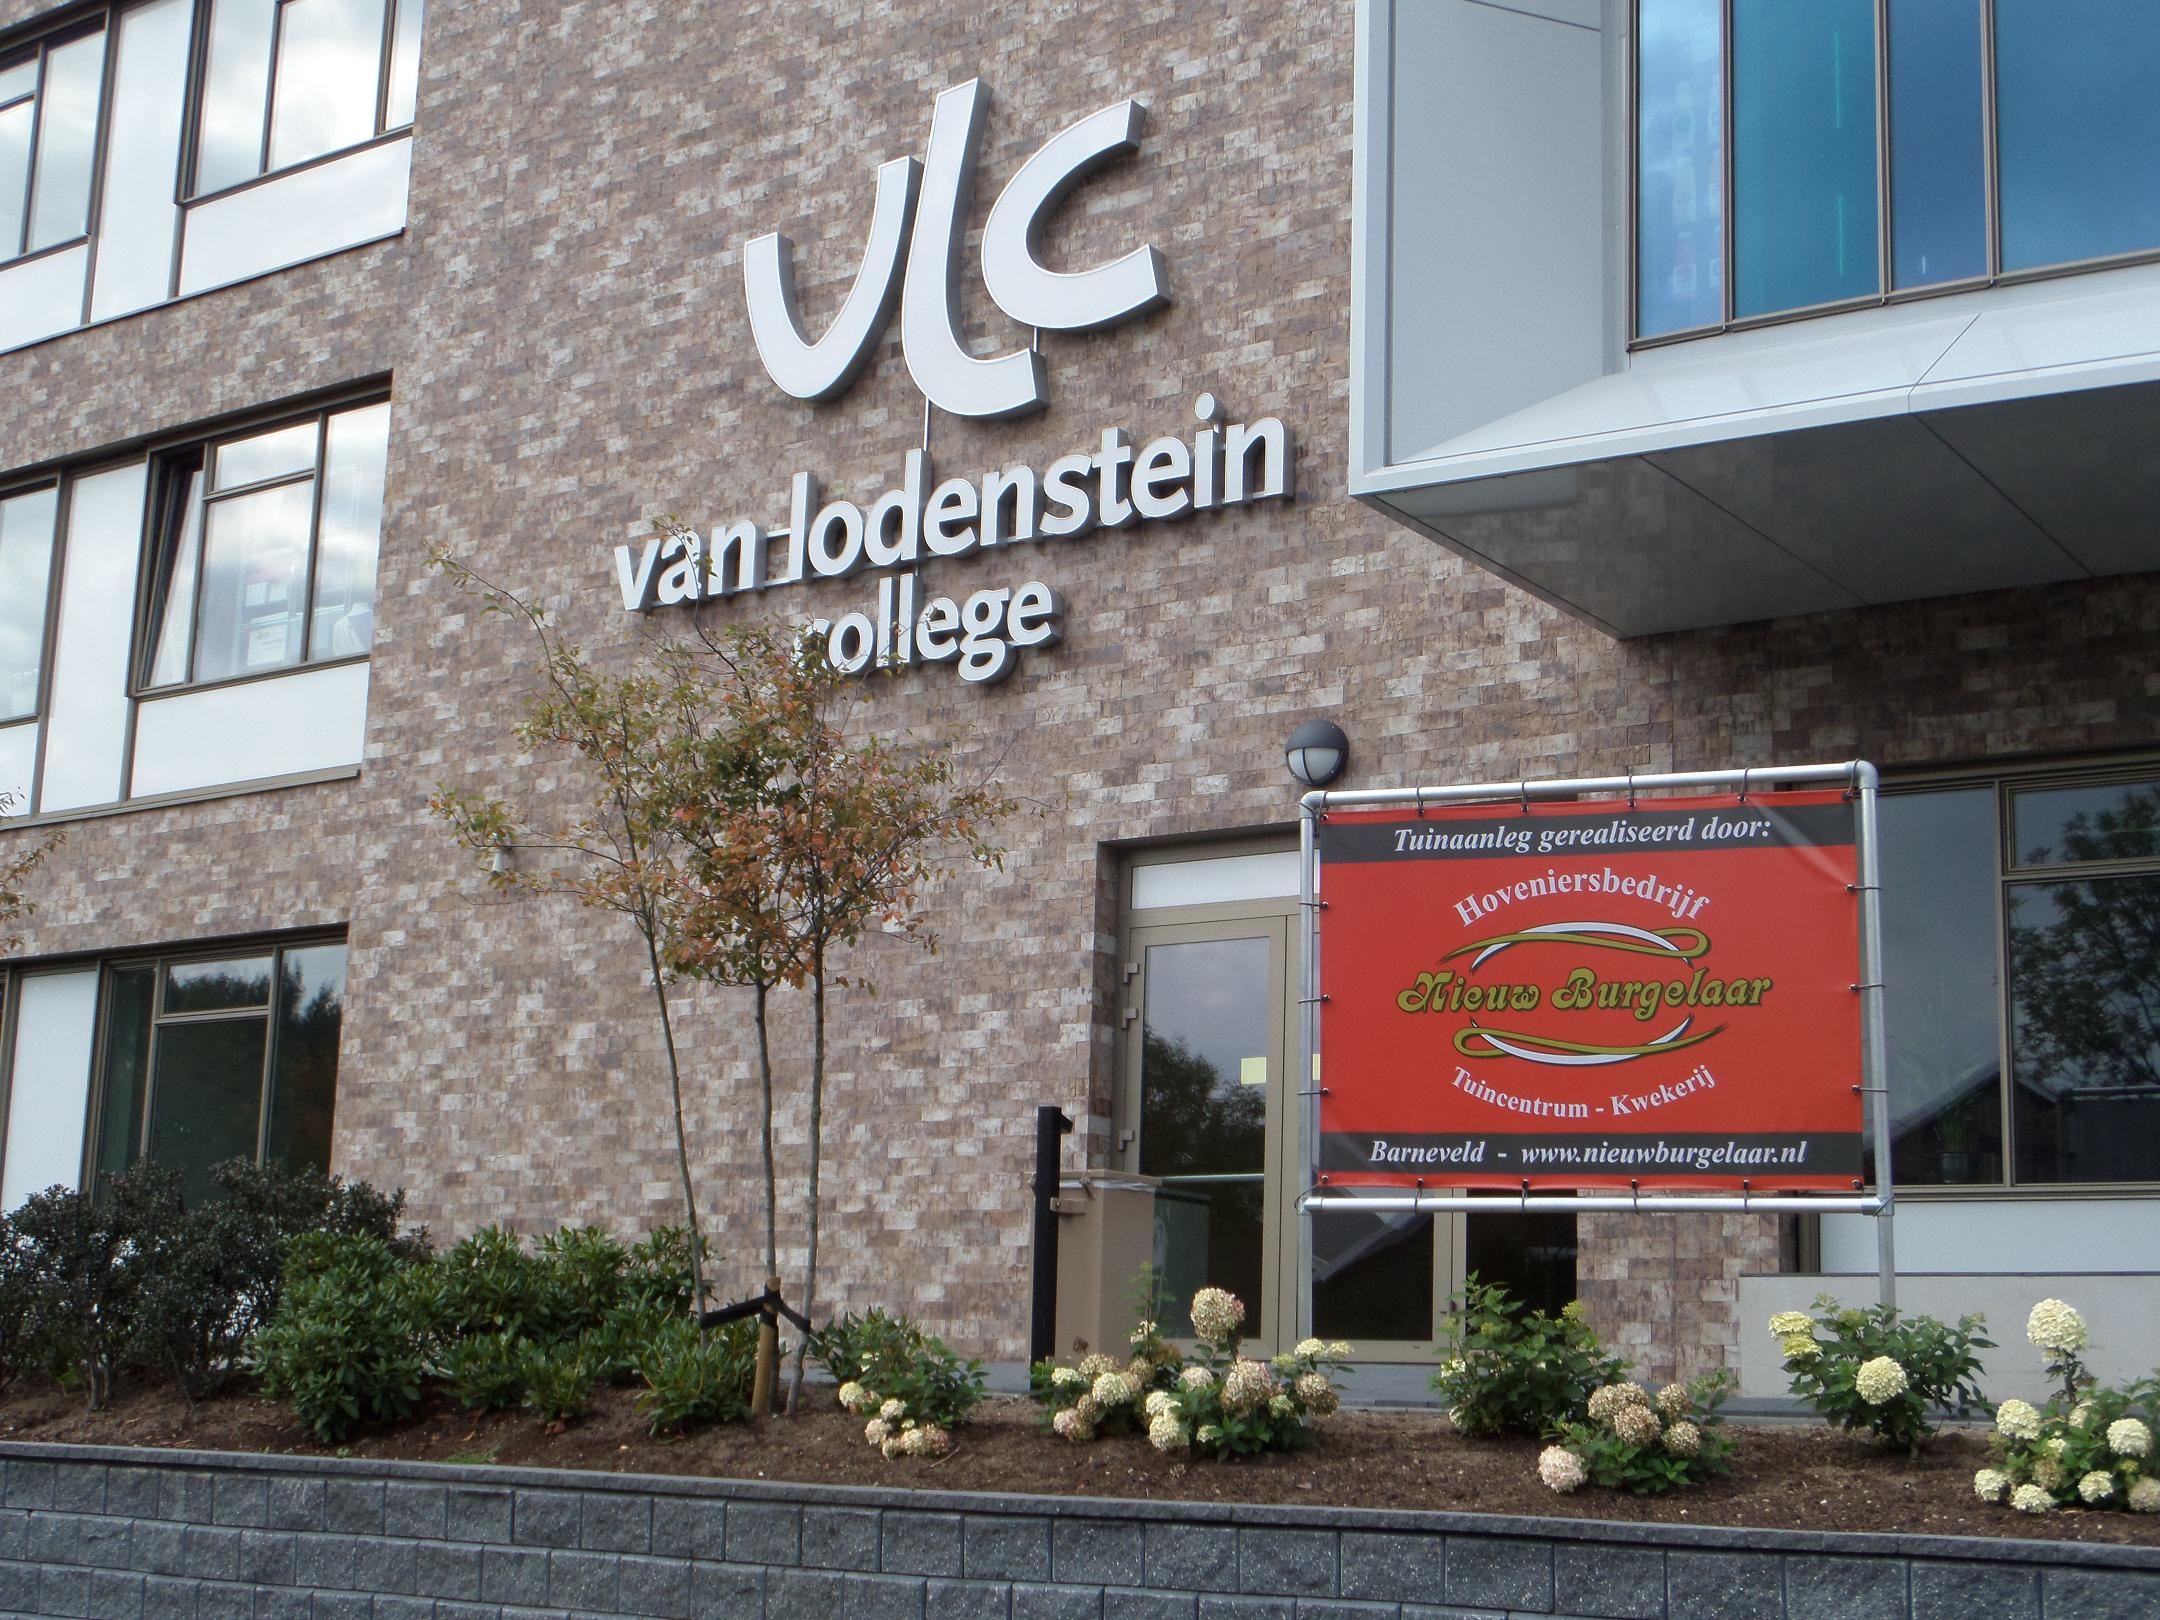 Project Van Lodenstein College